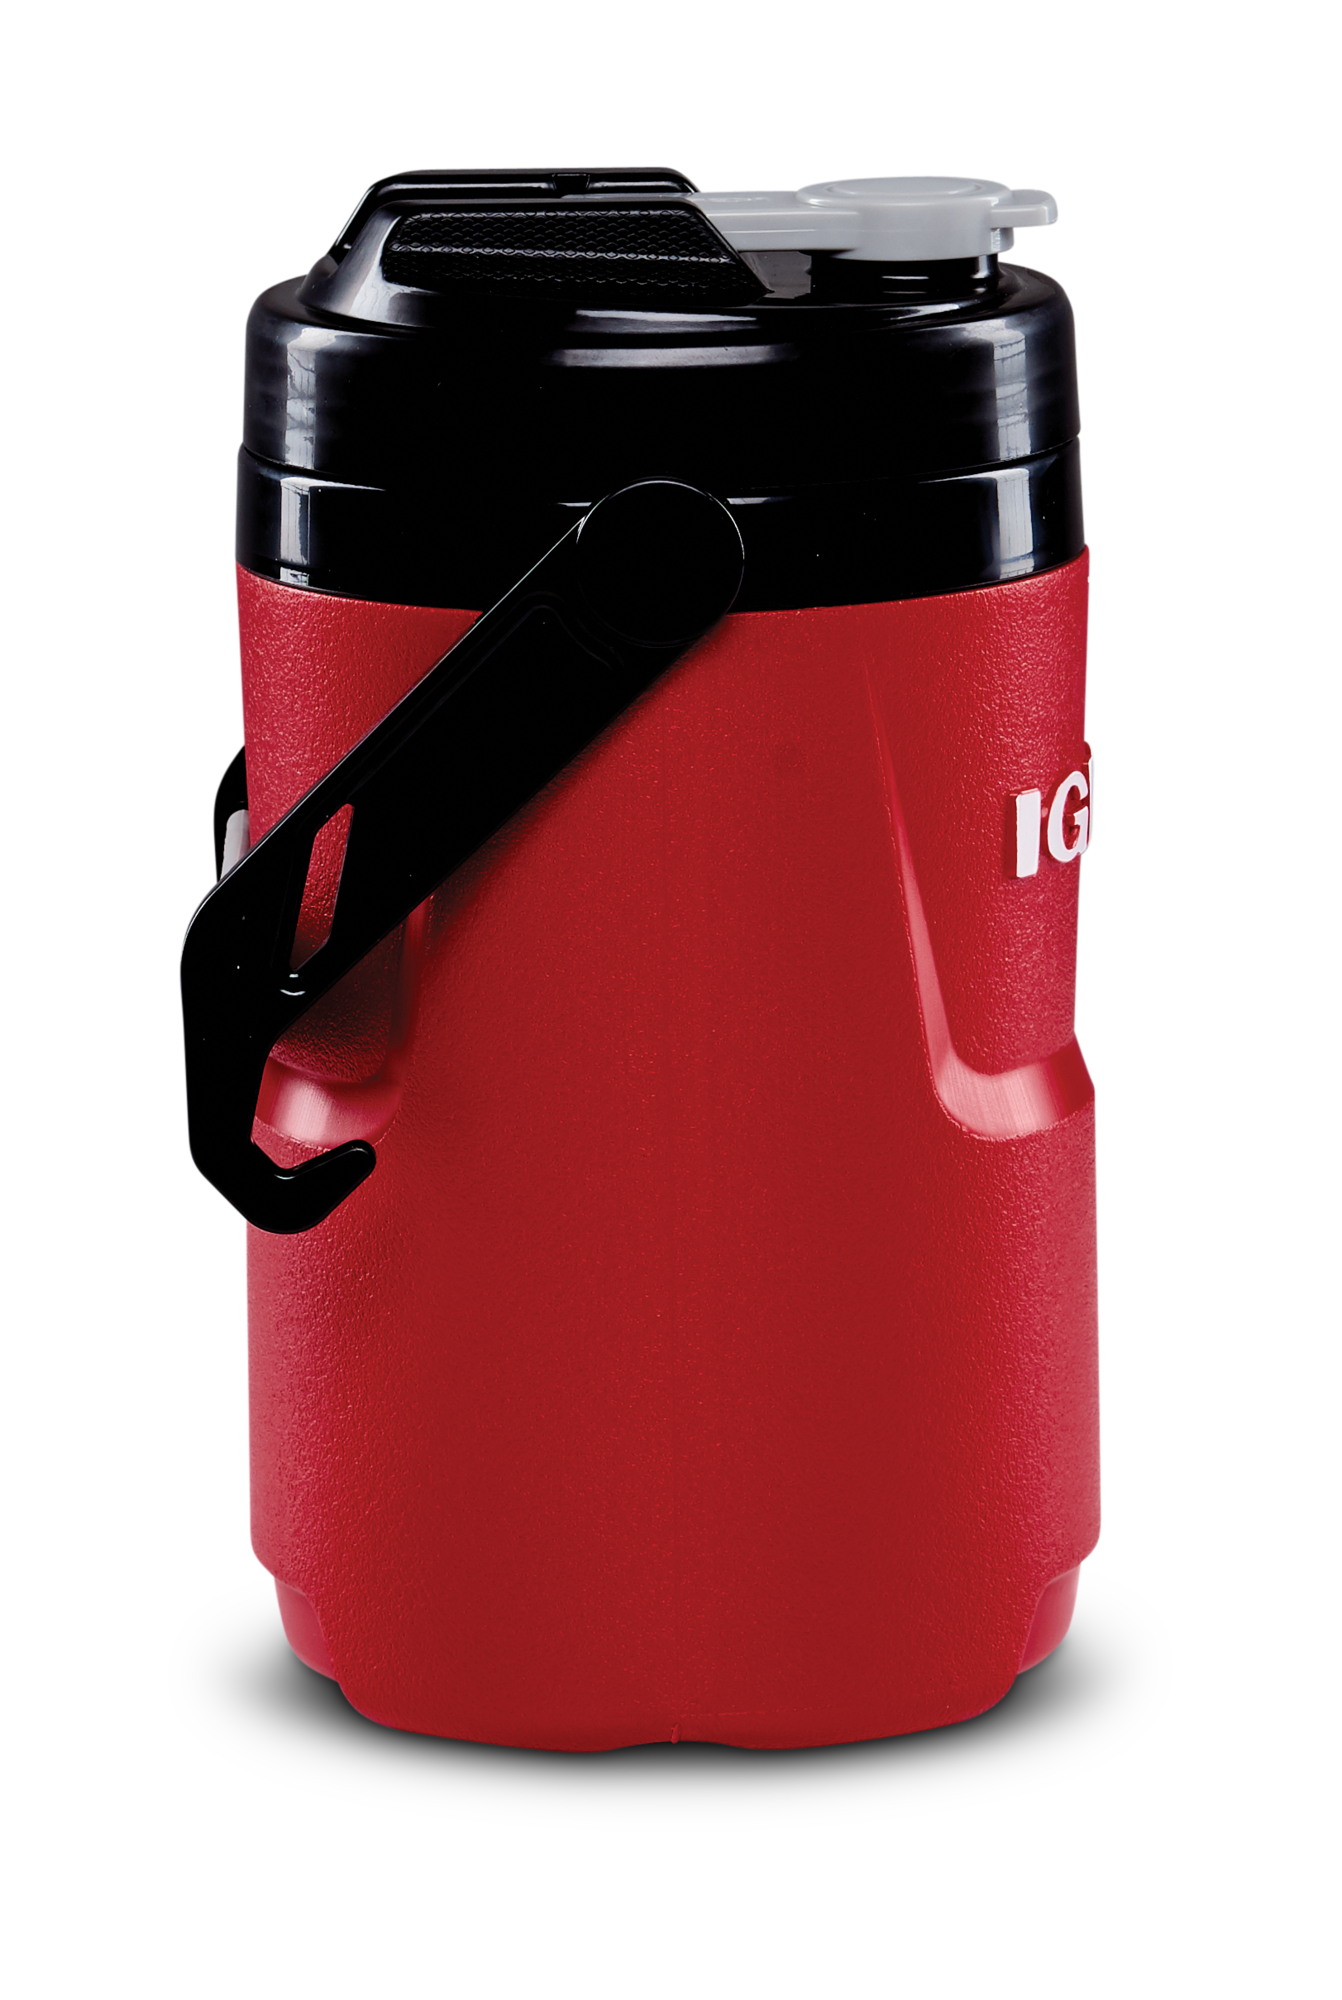 Igloo 1/2-Gallon Laguna Pro Beverage Cooler - Red - image 5 of 6